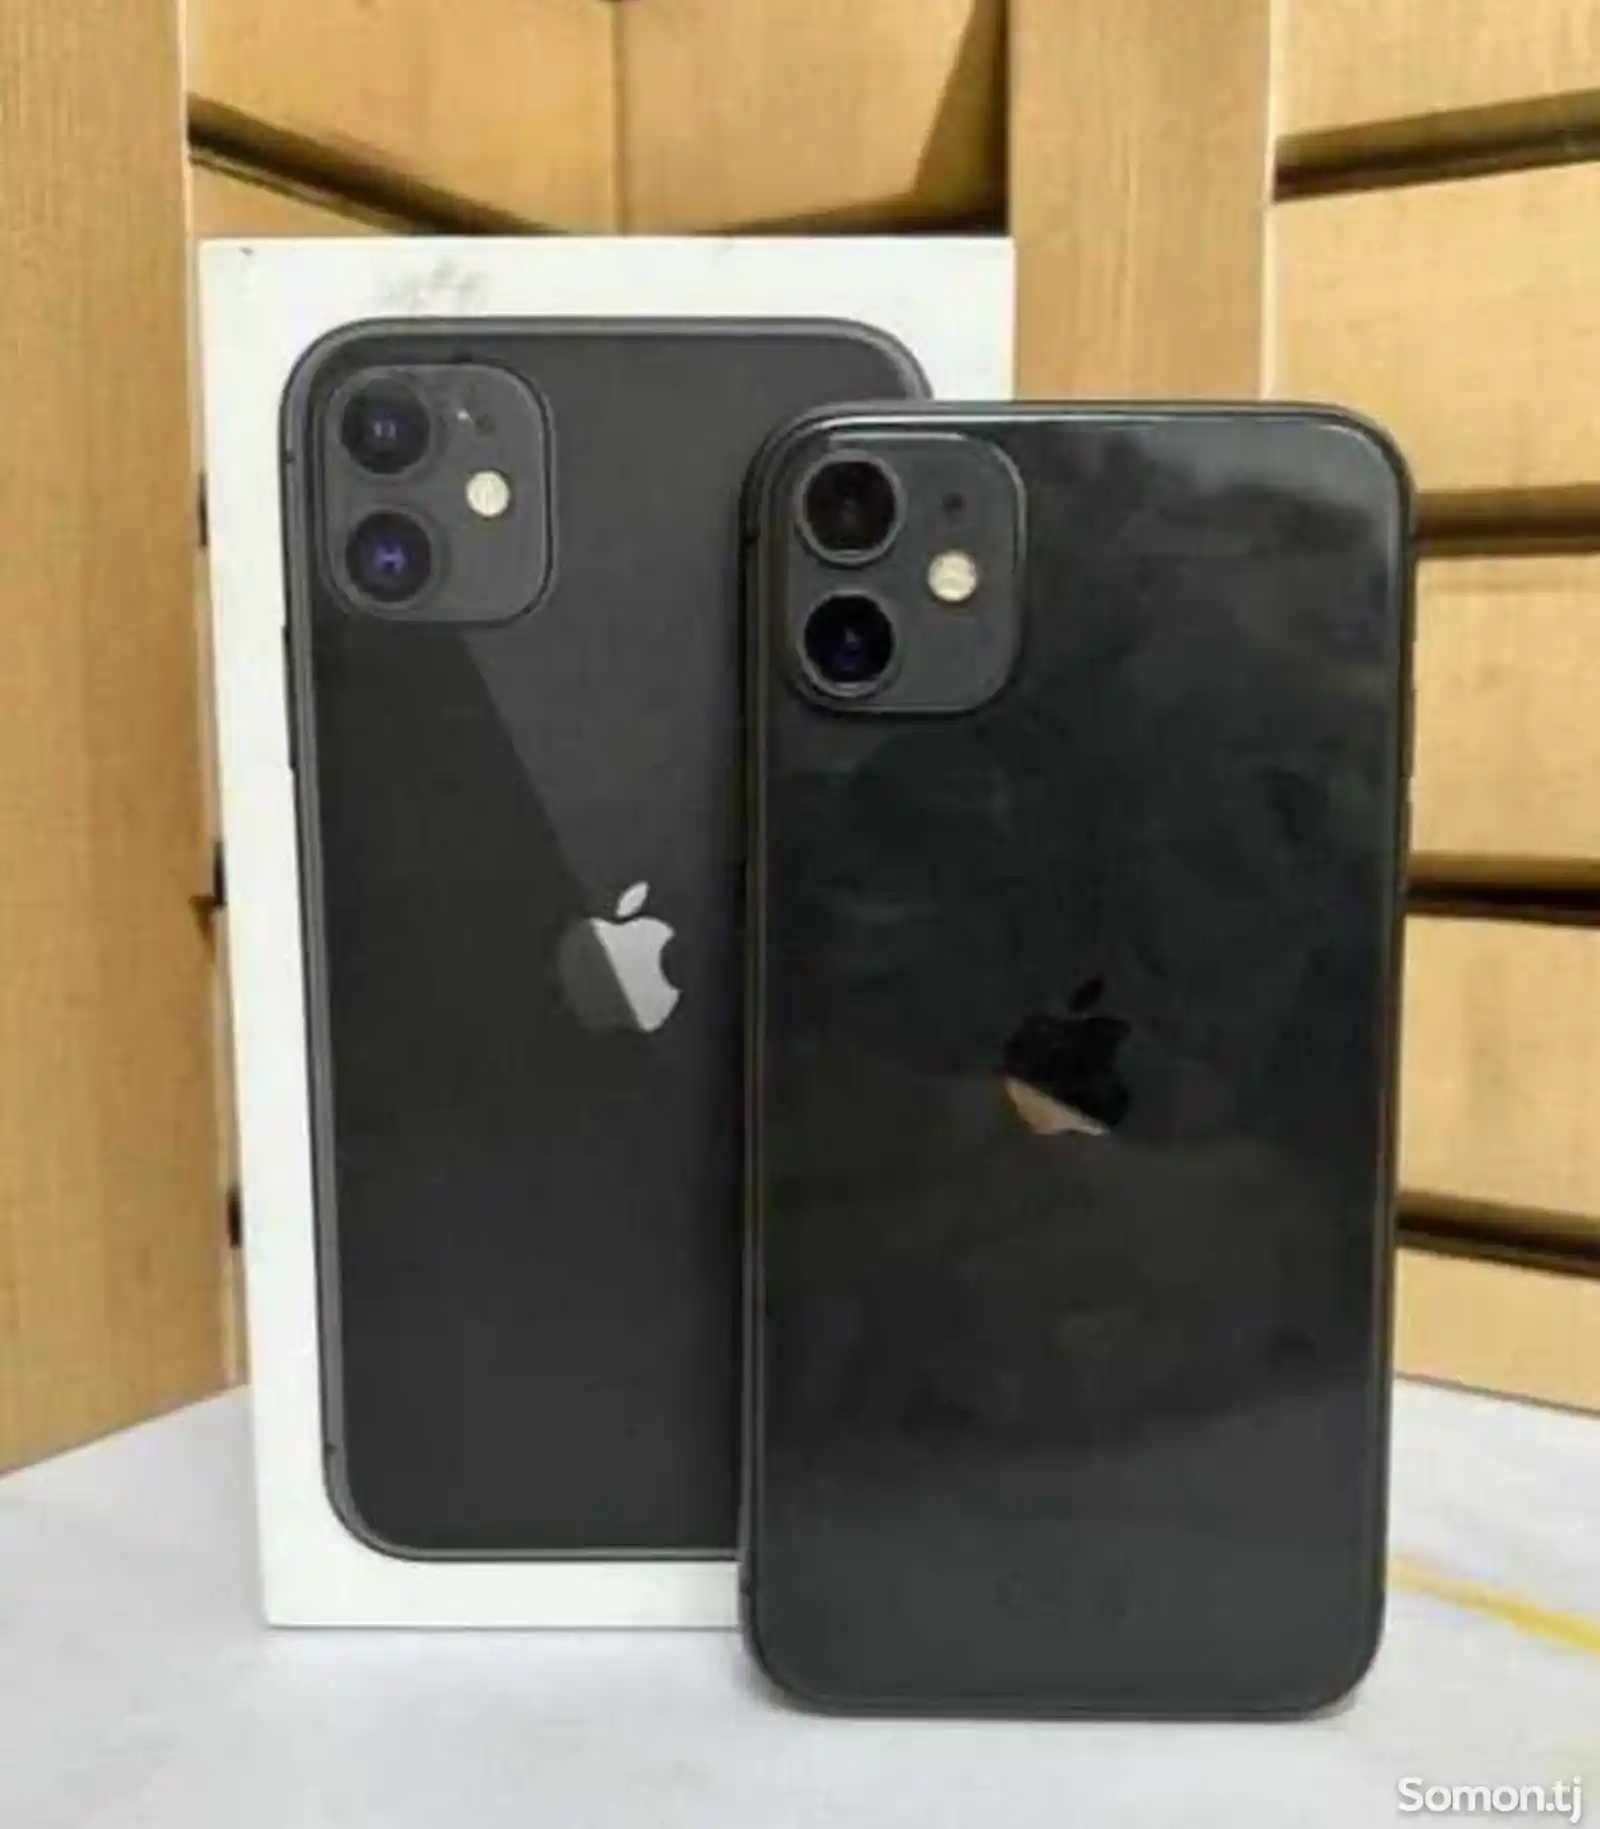 Apple iPhone 11, 512 gb, Black